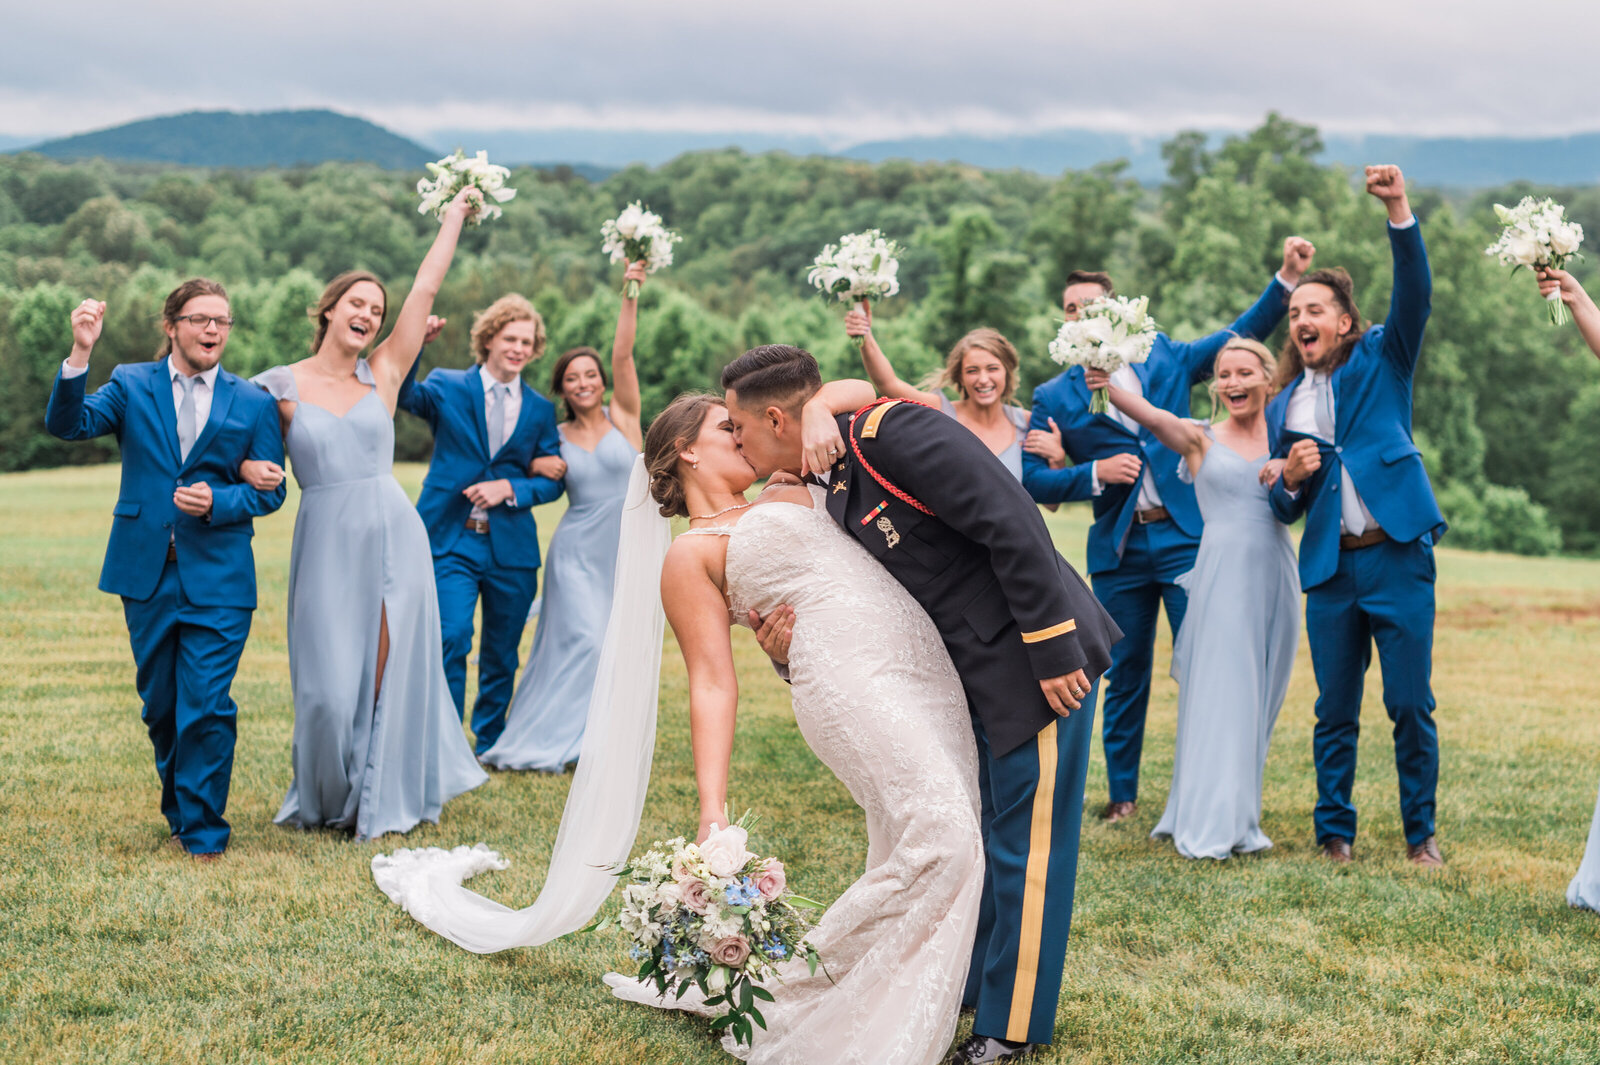 Paige & Brayden - Virginia Wedding Photographer - Sierra Vista VA - Amative Creative - 361